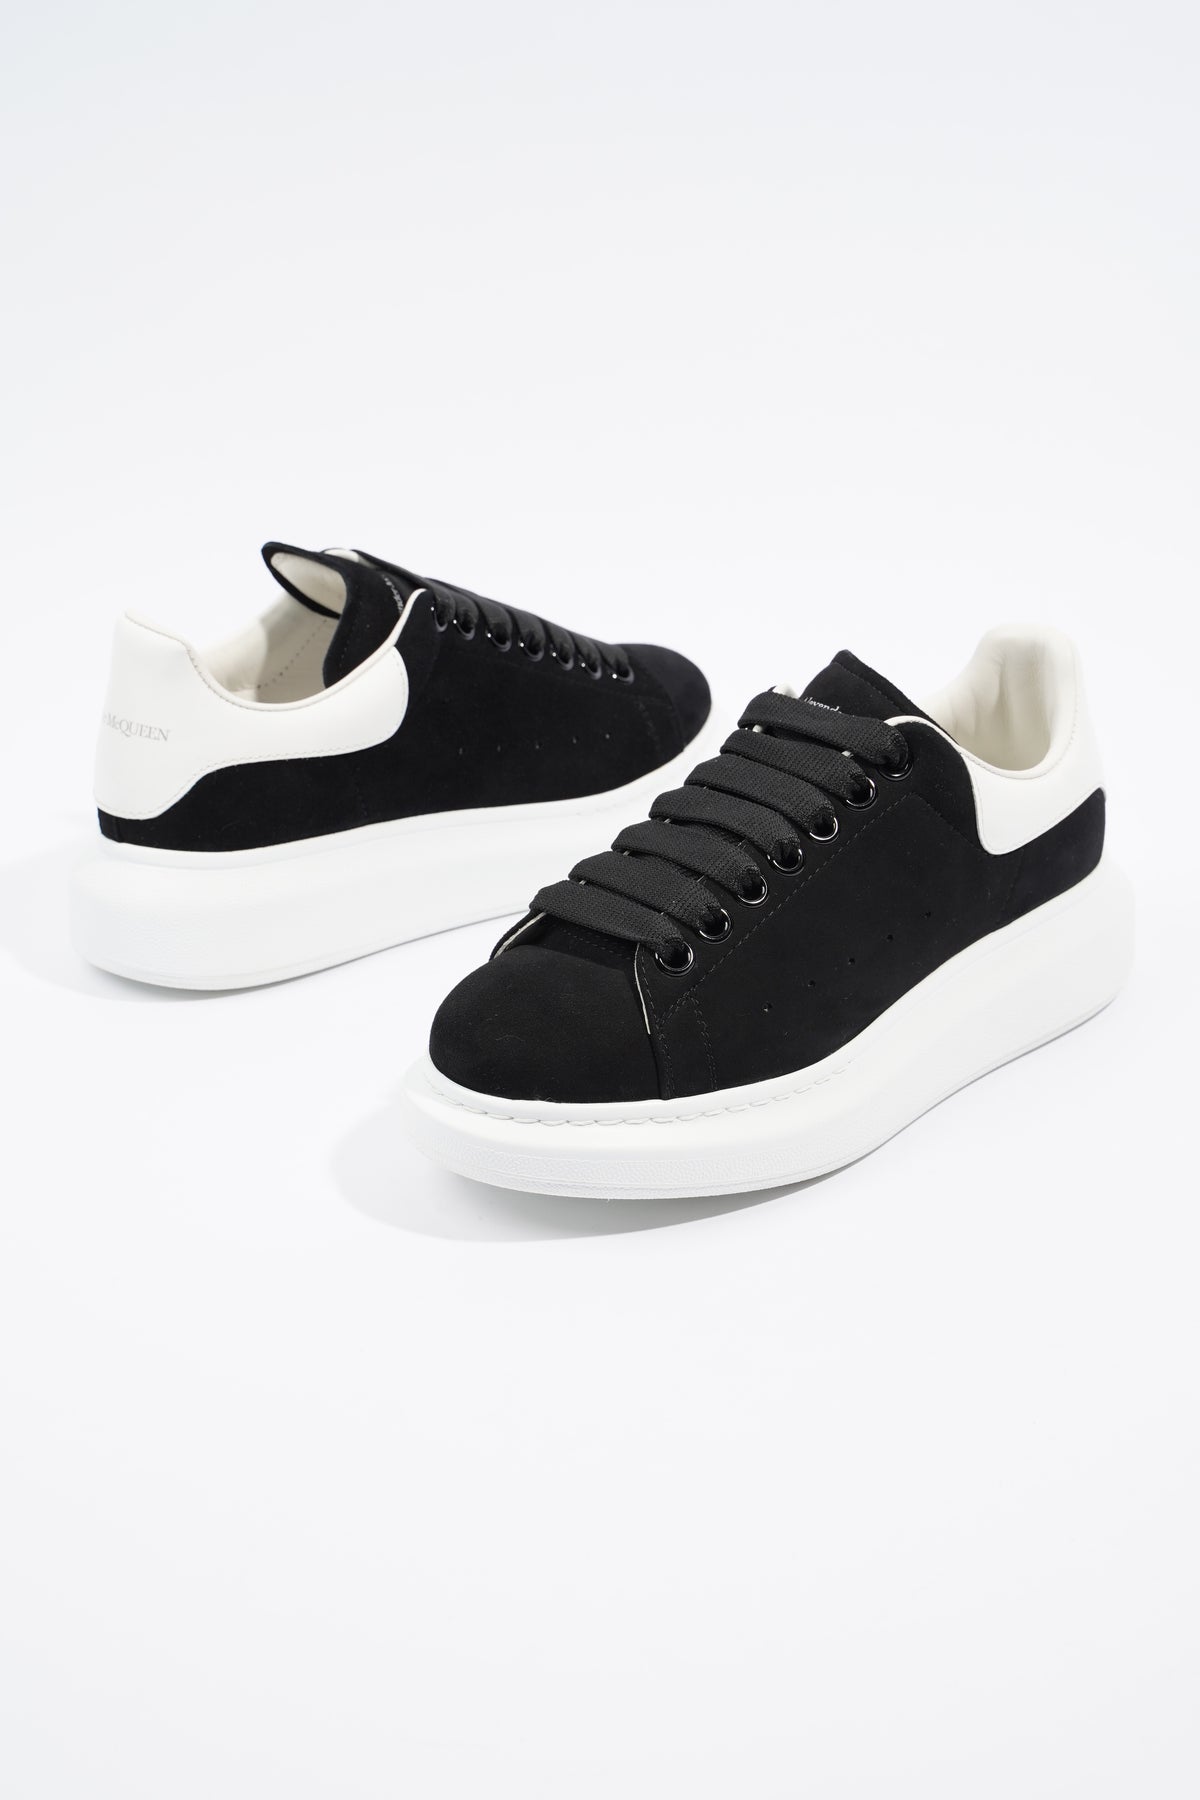 Louis Vuitton Skate Sneaker White / Beige EU 43.5 / UK 9.5 – Luxe